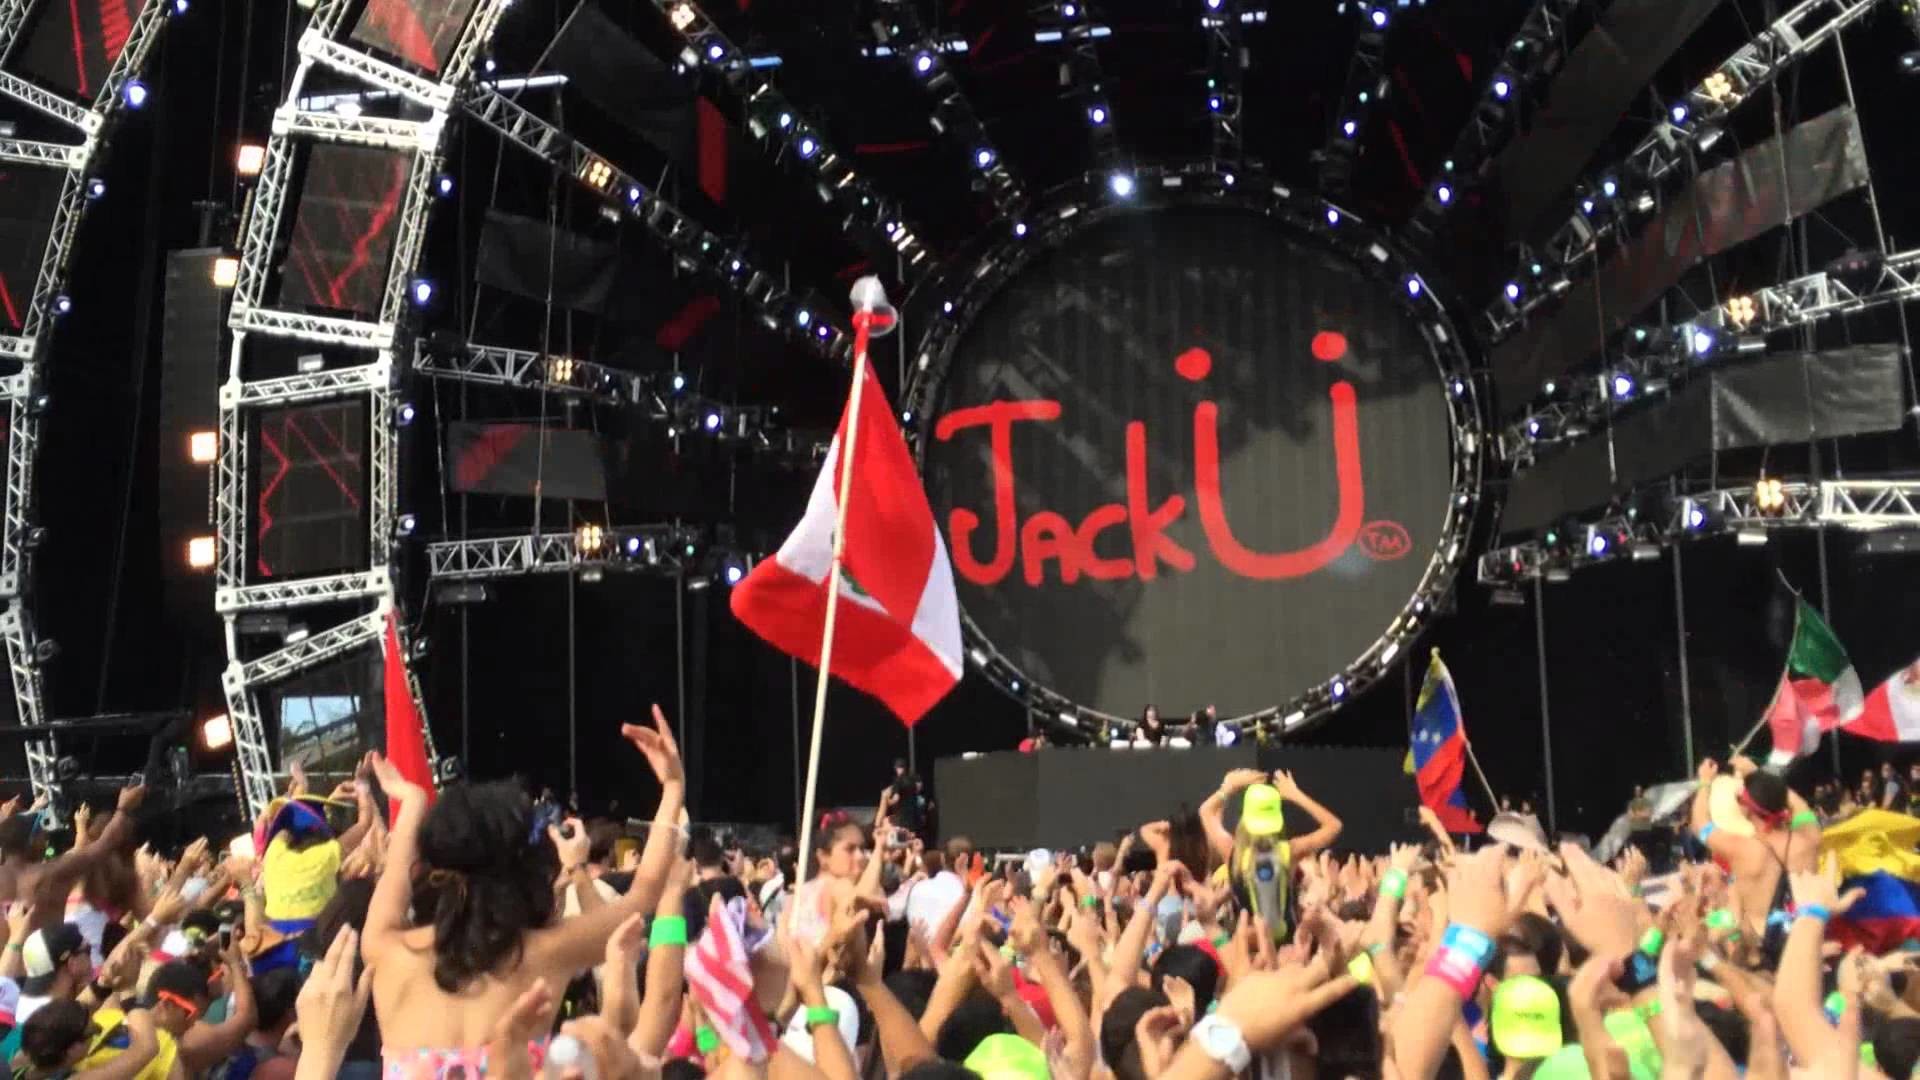 1920x1080 Jack U - Diplo and Skrillex at Ultra Music Festival 2014 + Bingo Players  Tribute at 4:44 (1080p)